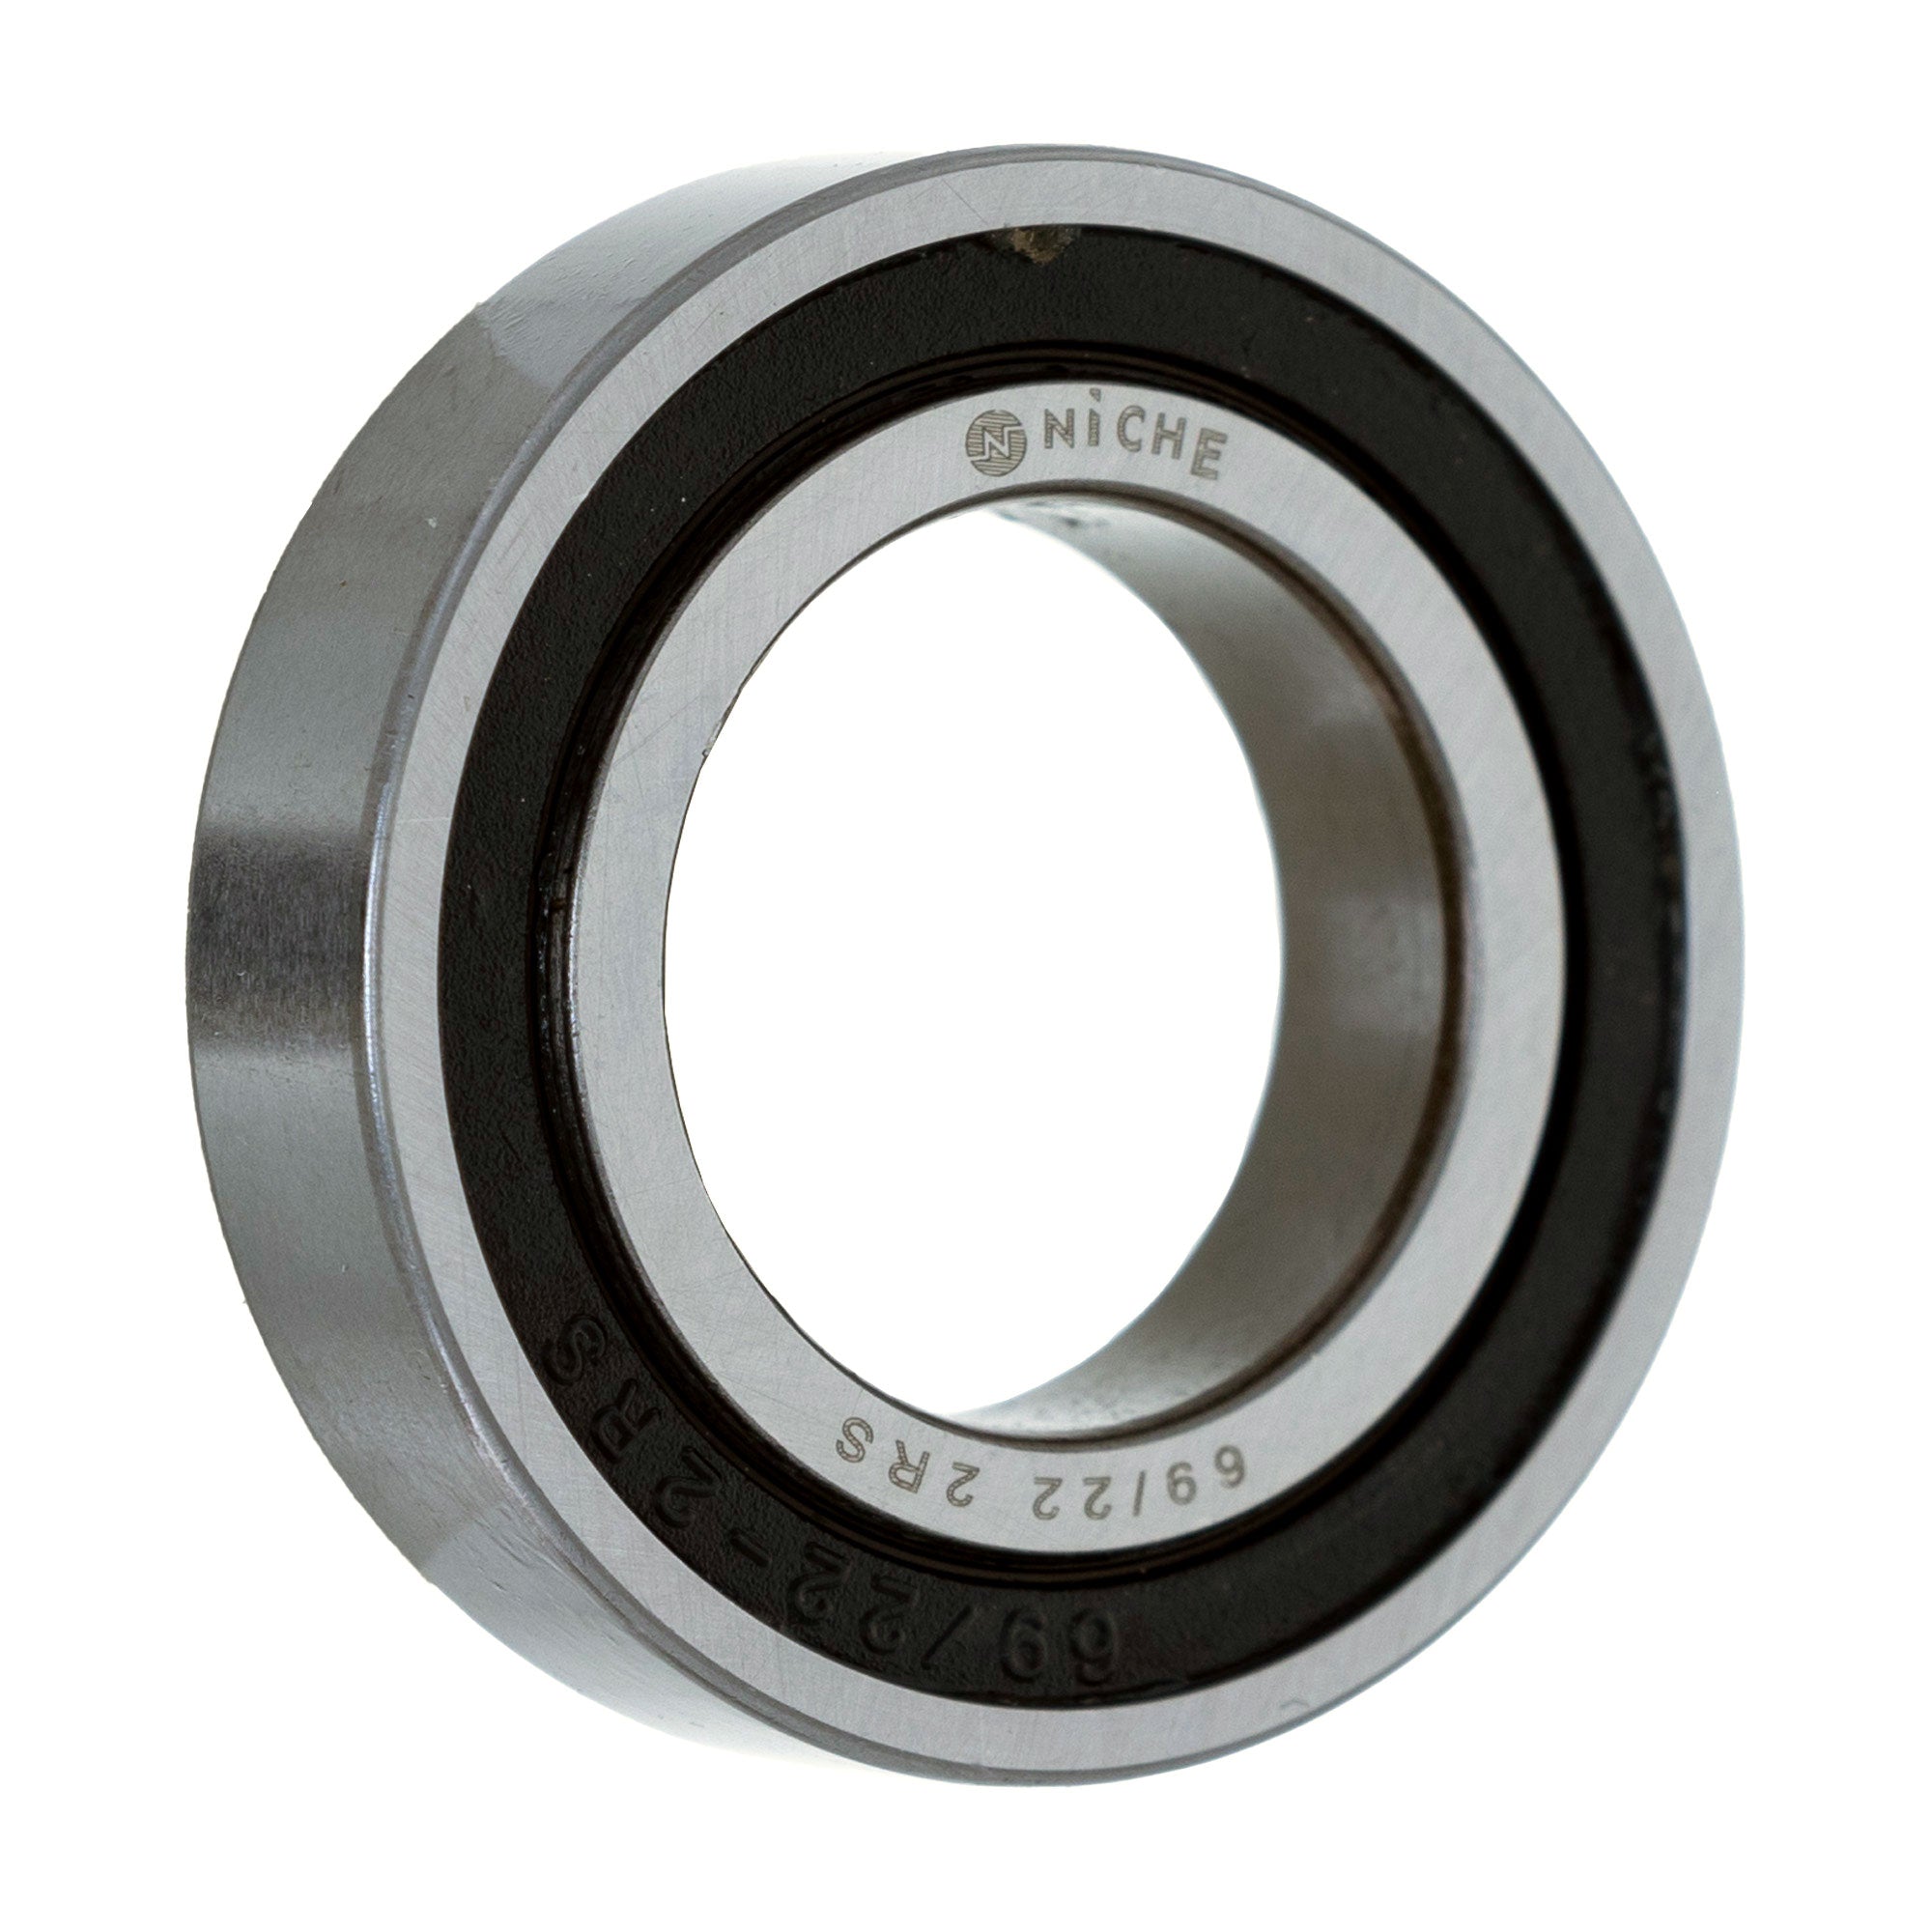 NICHE MK1009226 Bearing & Seal Kit for zOTHER RMZ450 RMZ250